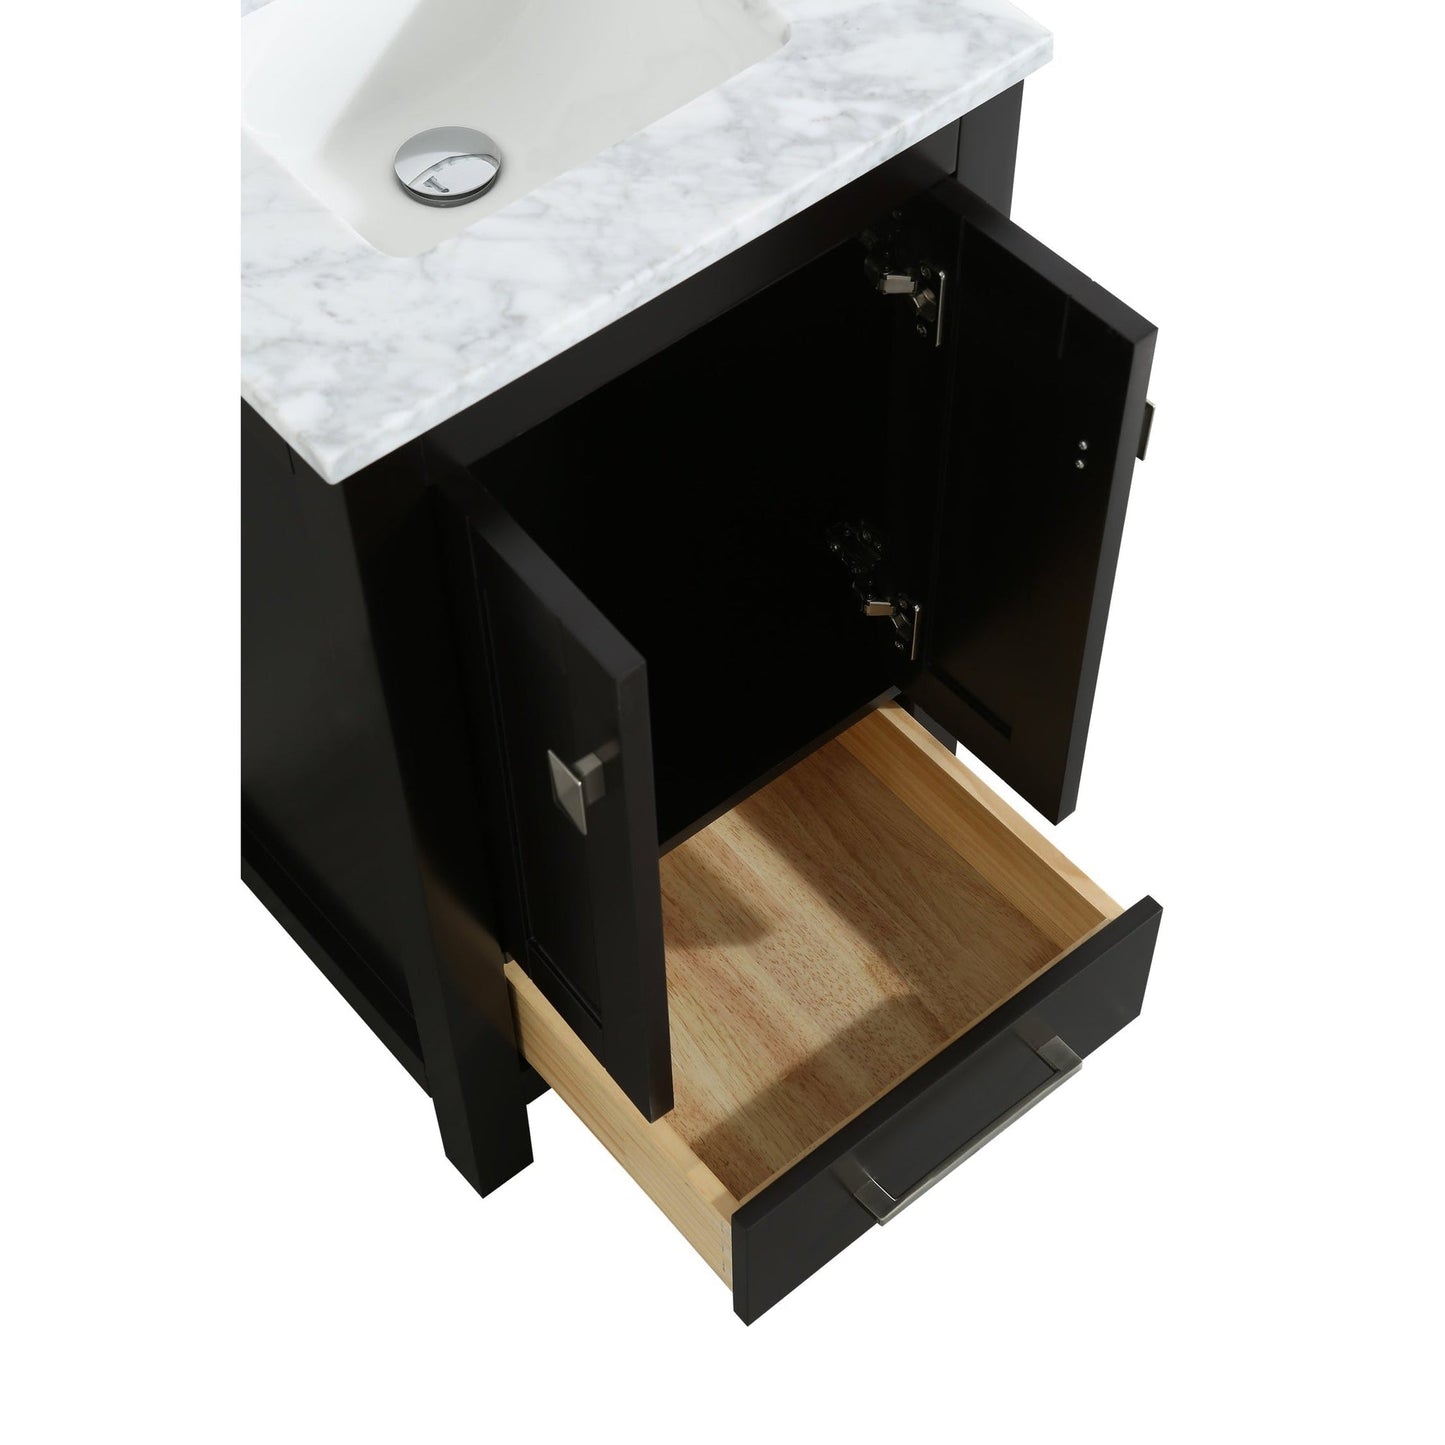 Eviva Aberdeen 24” x 34” Espresso Freestanding Bathroom Vanity With Single Undermount Sink